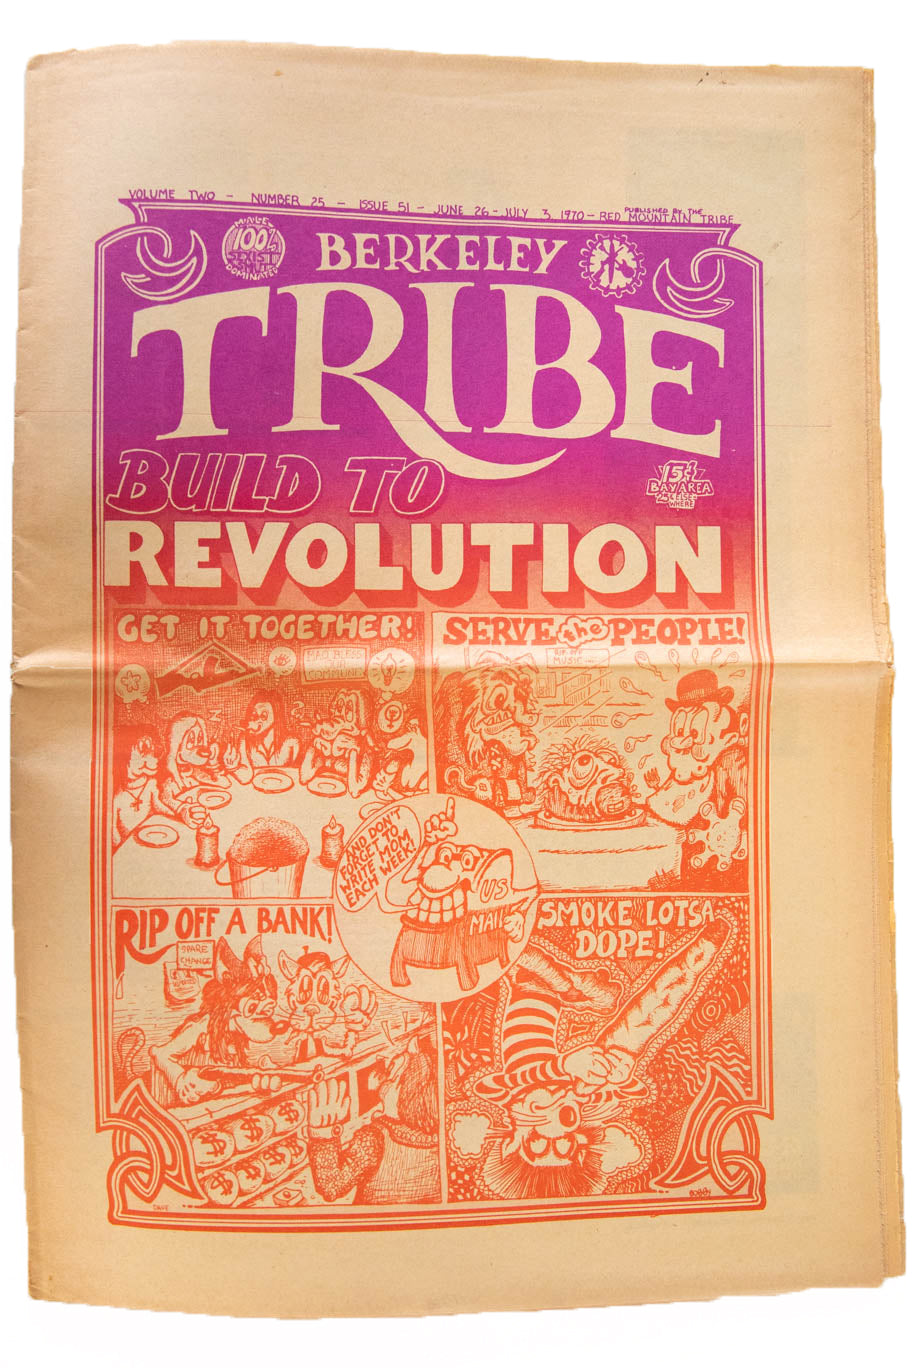 BERKELEY TRIBE Vol. 2 No. 25 Issue 51